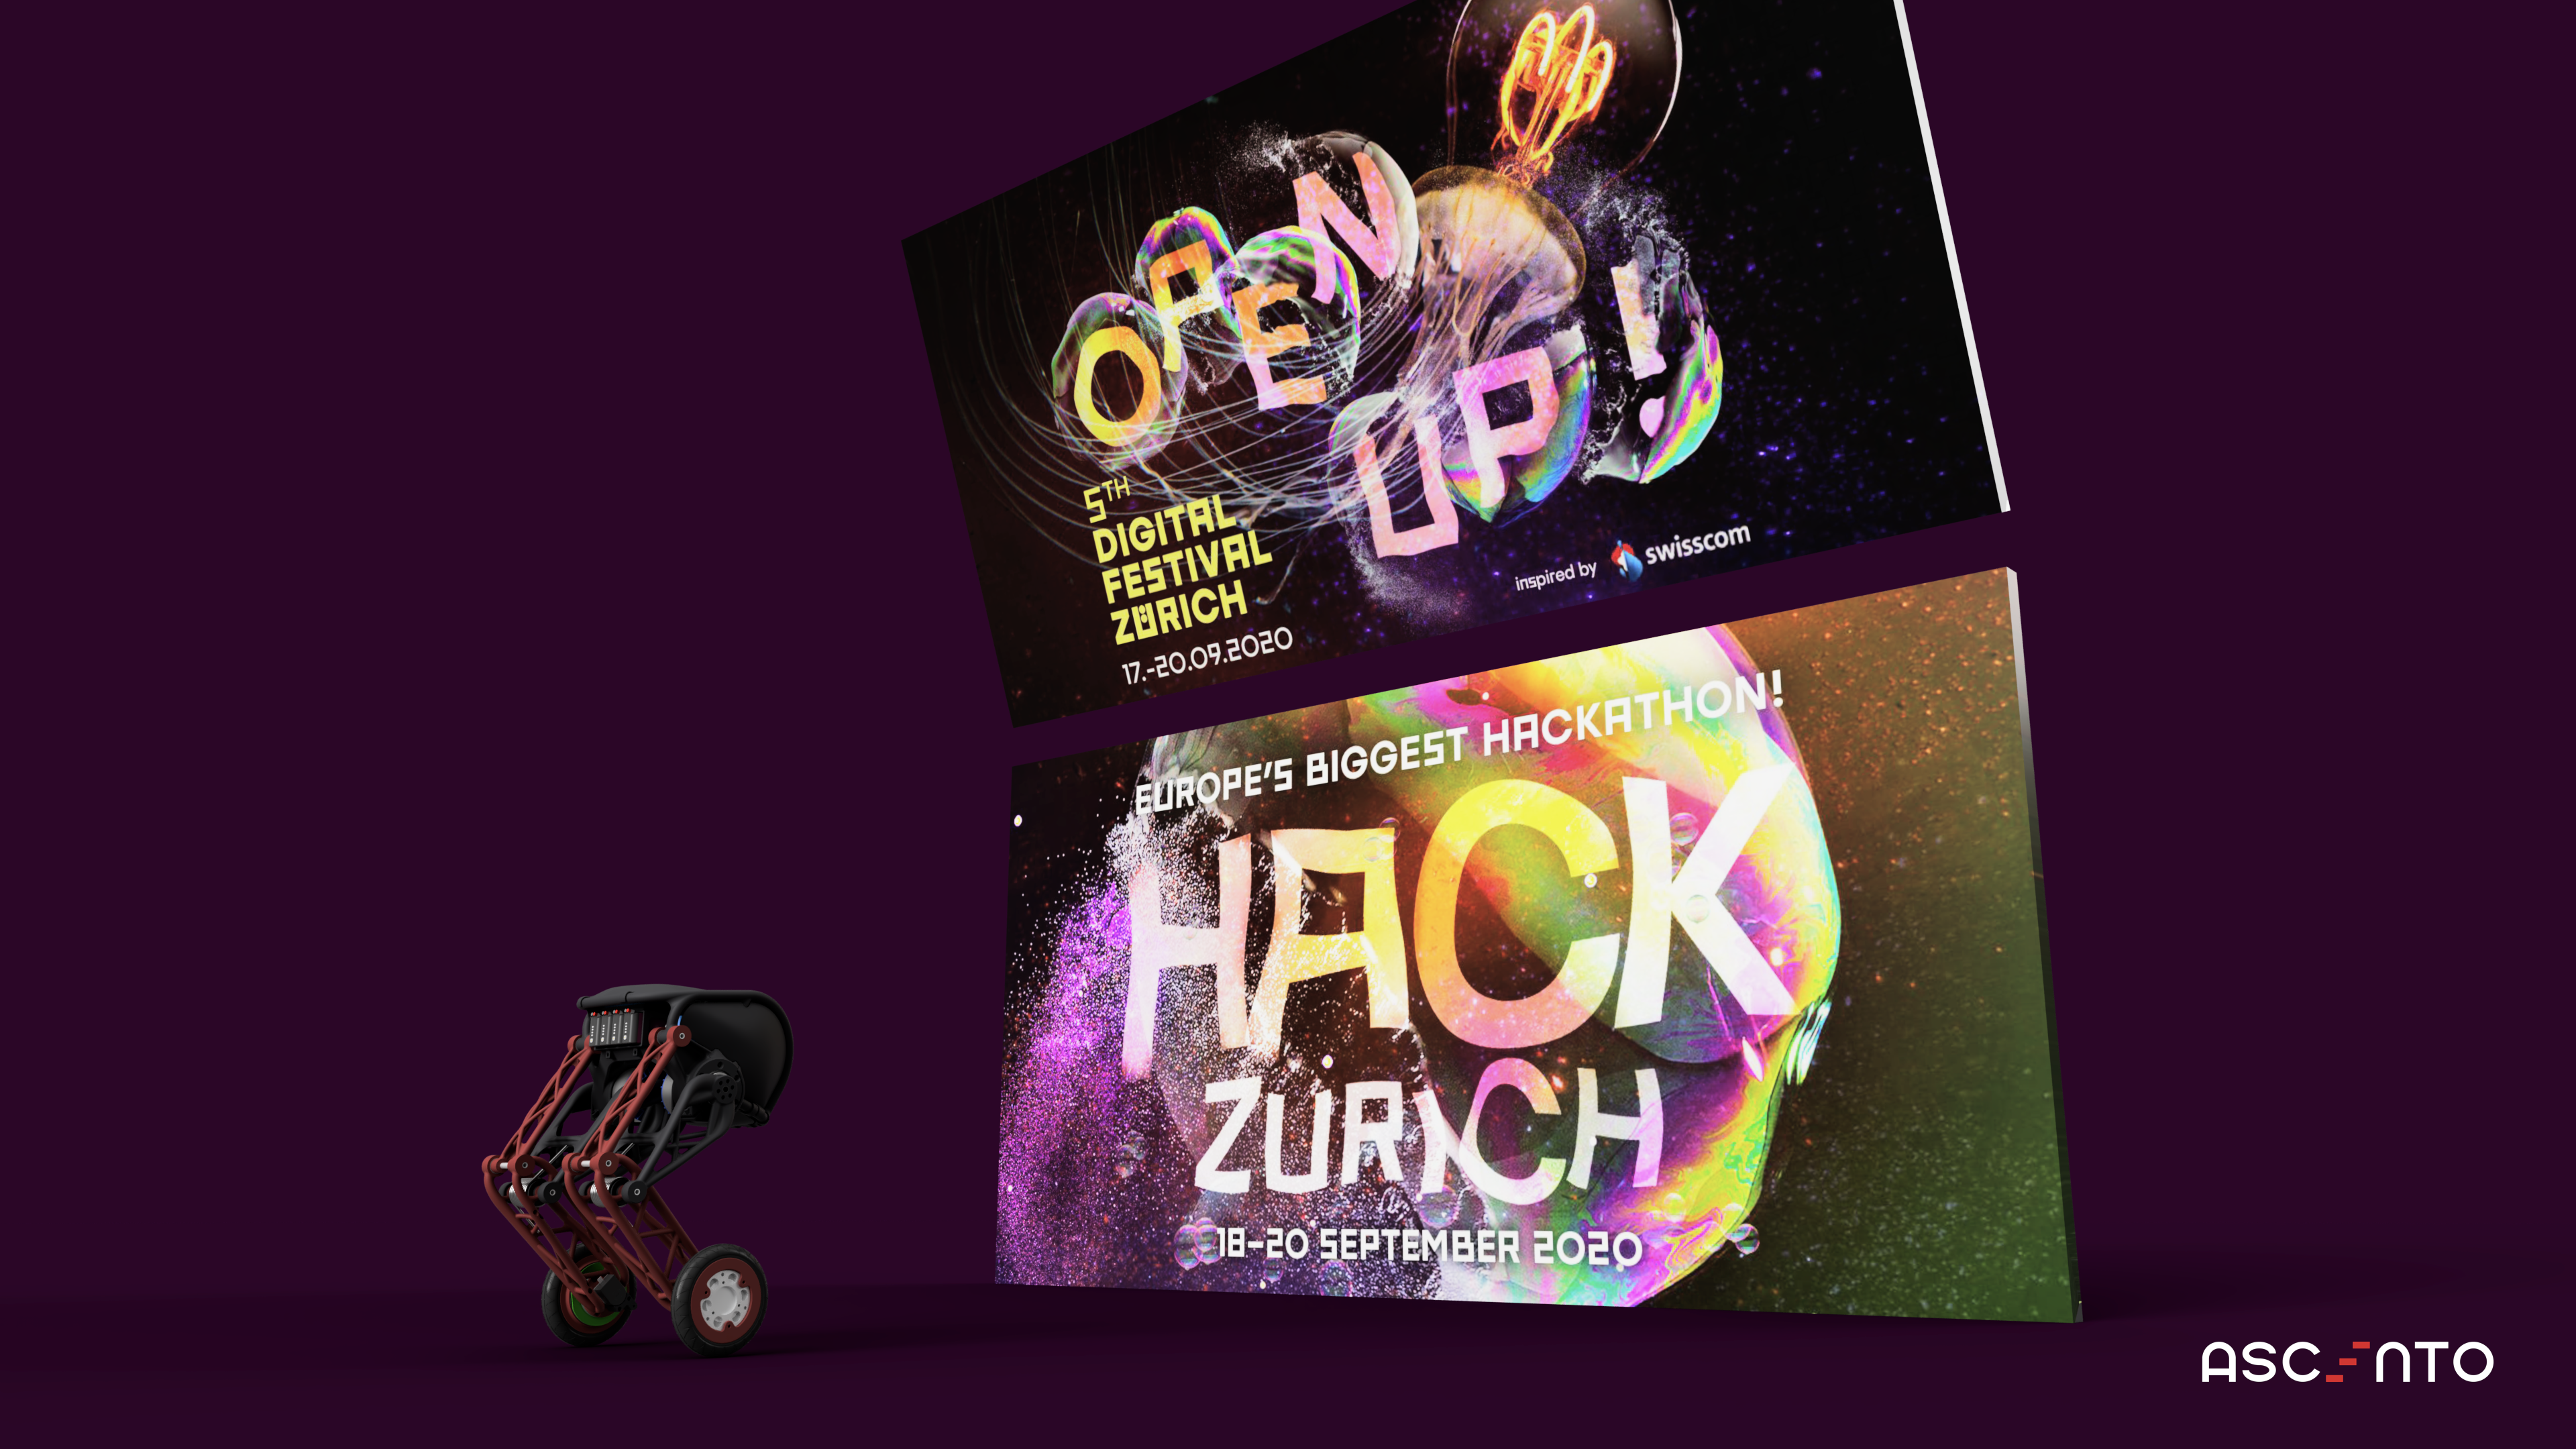 Digital Festival and Hack Zurich